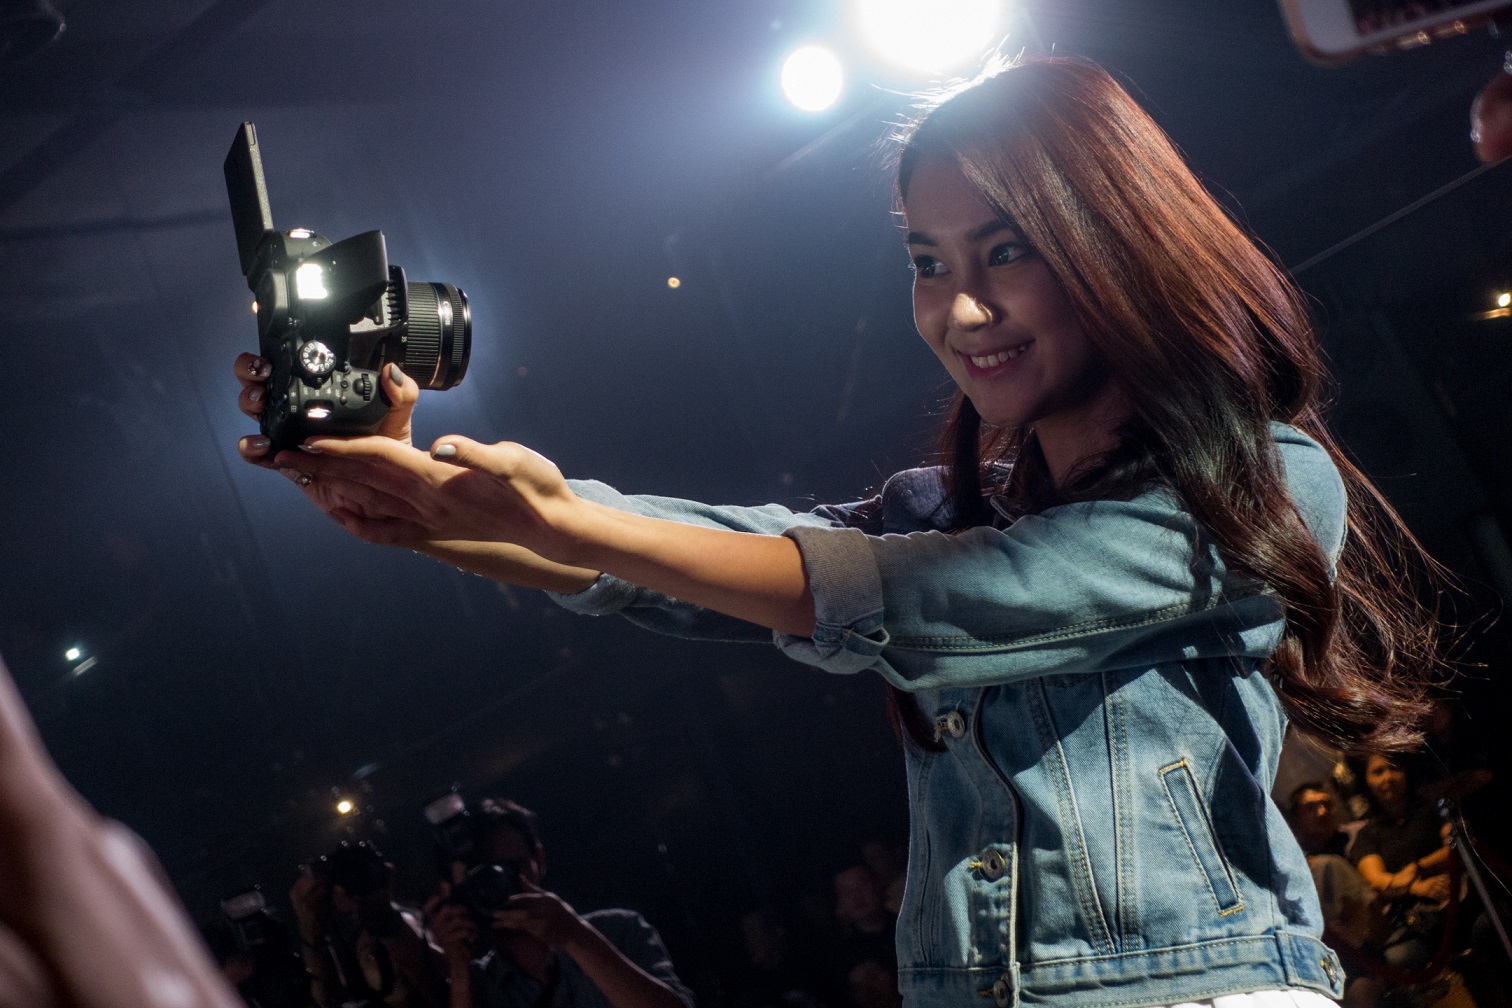 Canon introduces three new EOS cameras